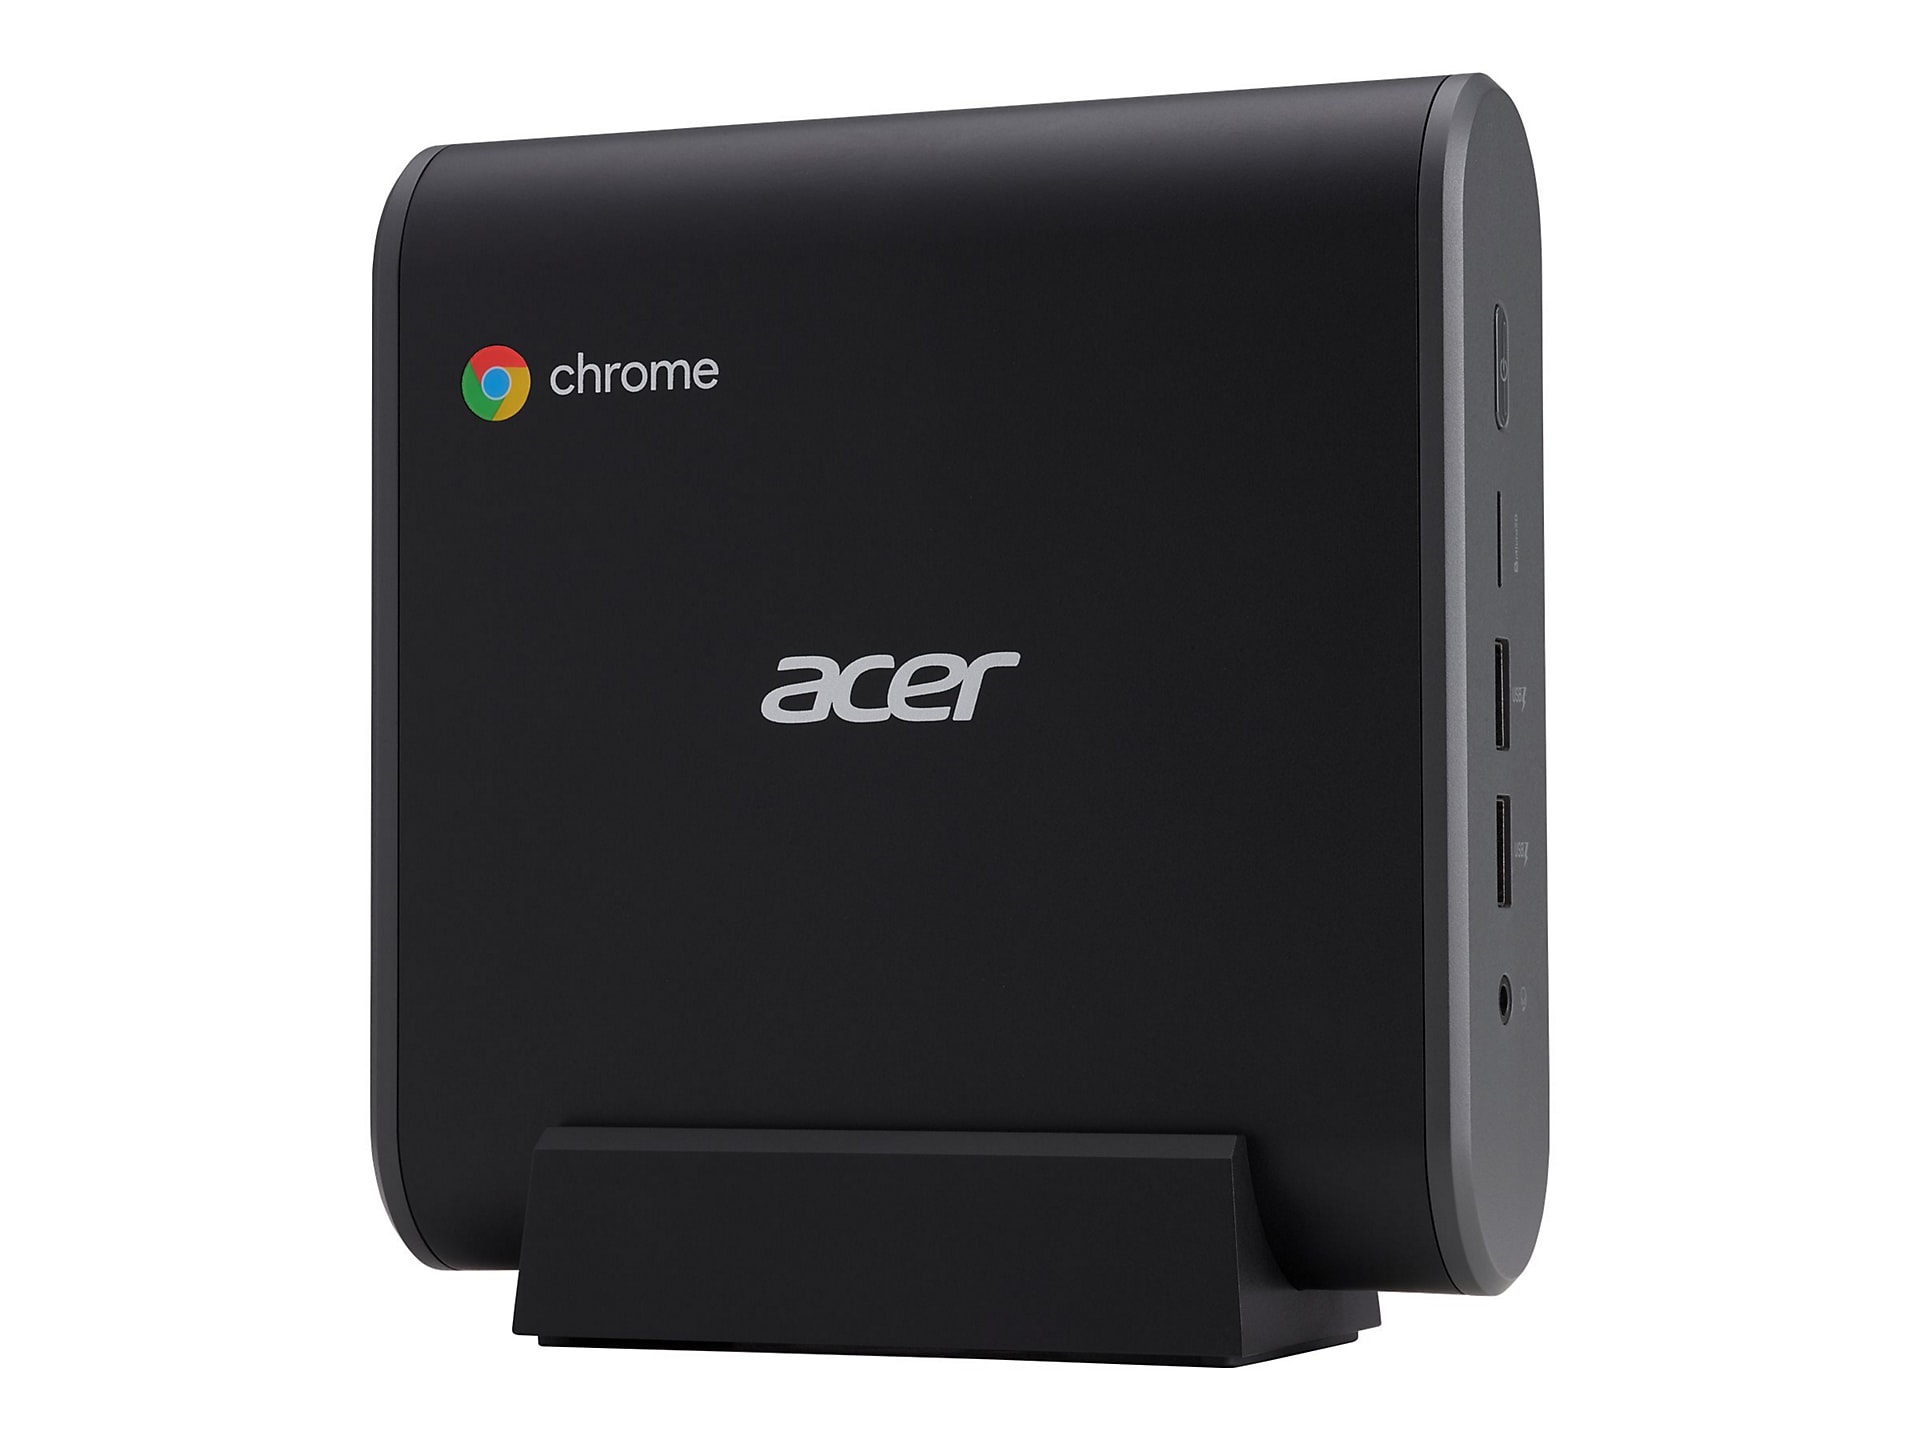 Acer Chromeboxes